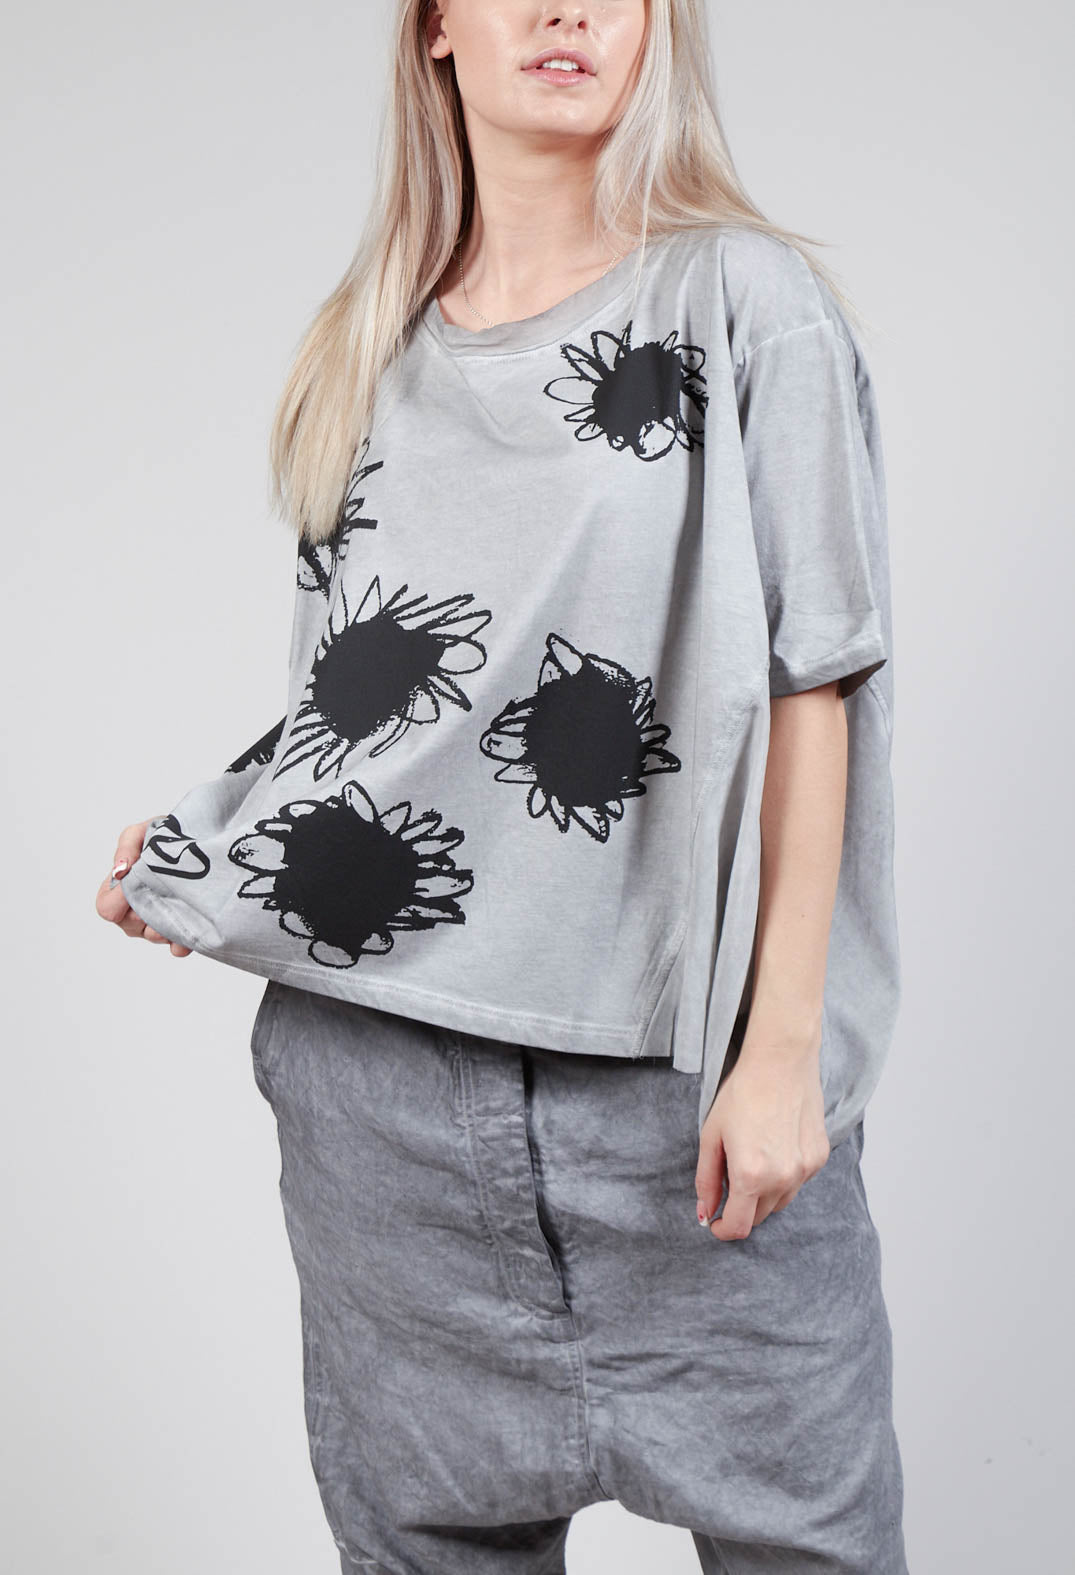 Sunflower graphic T-Shirt in C.Coal 10% Flock Cloud